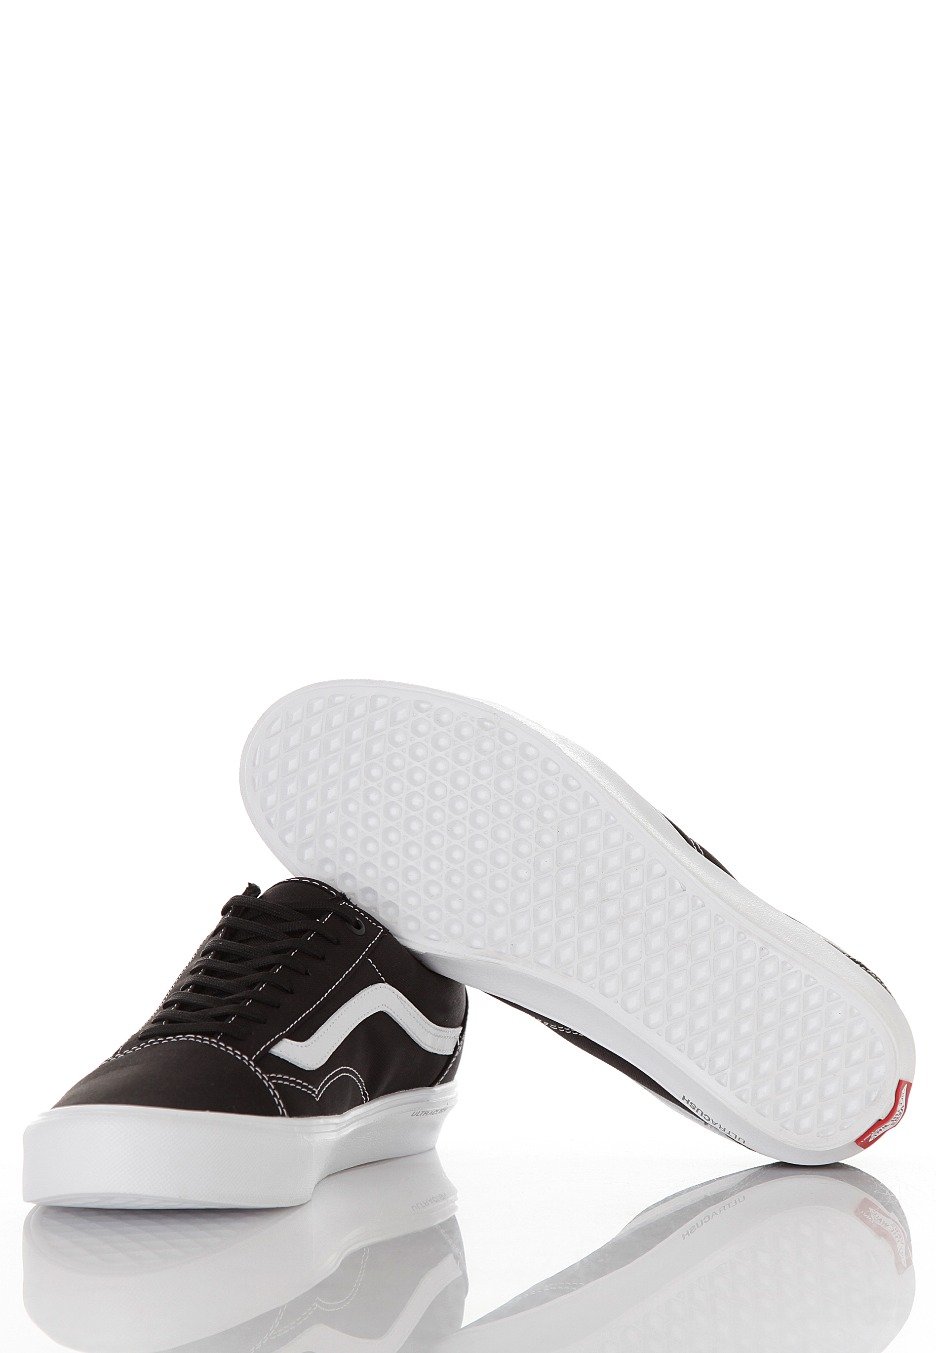 Definition Og så videre Få kontrol Vans - Old Skool Lite Black/True White - Girl Shoes | IMPERICON US